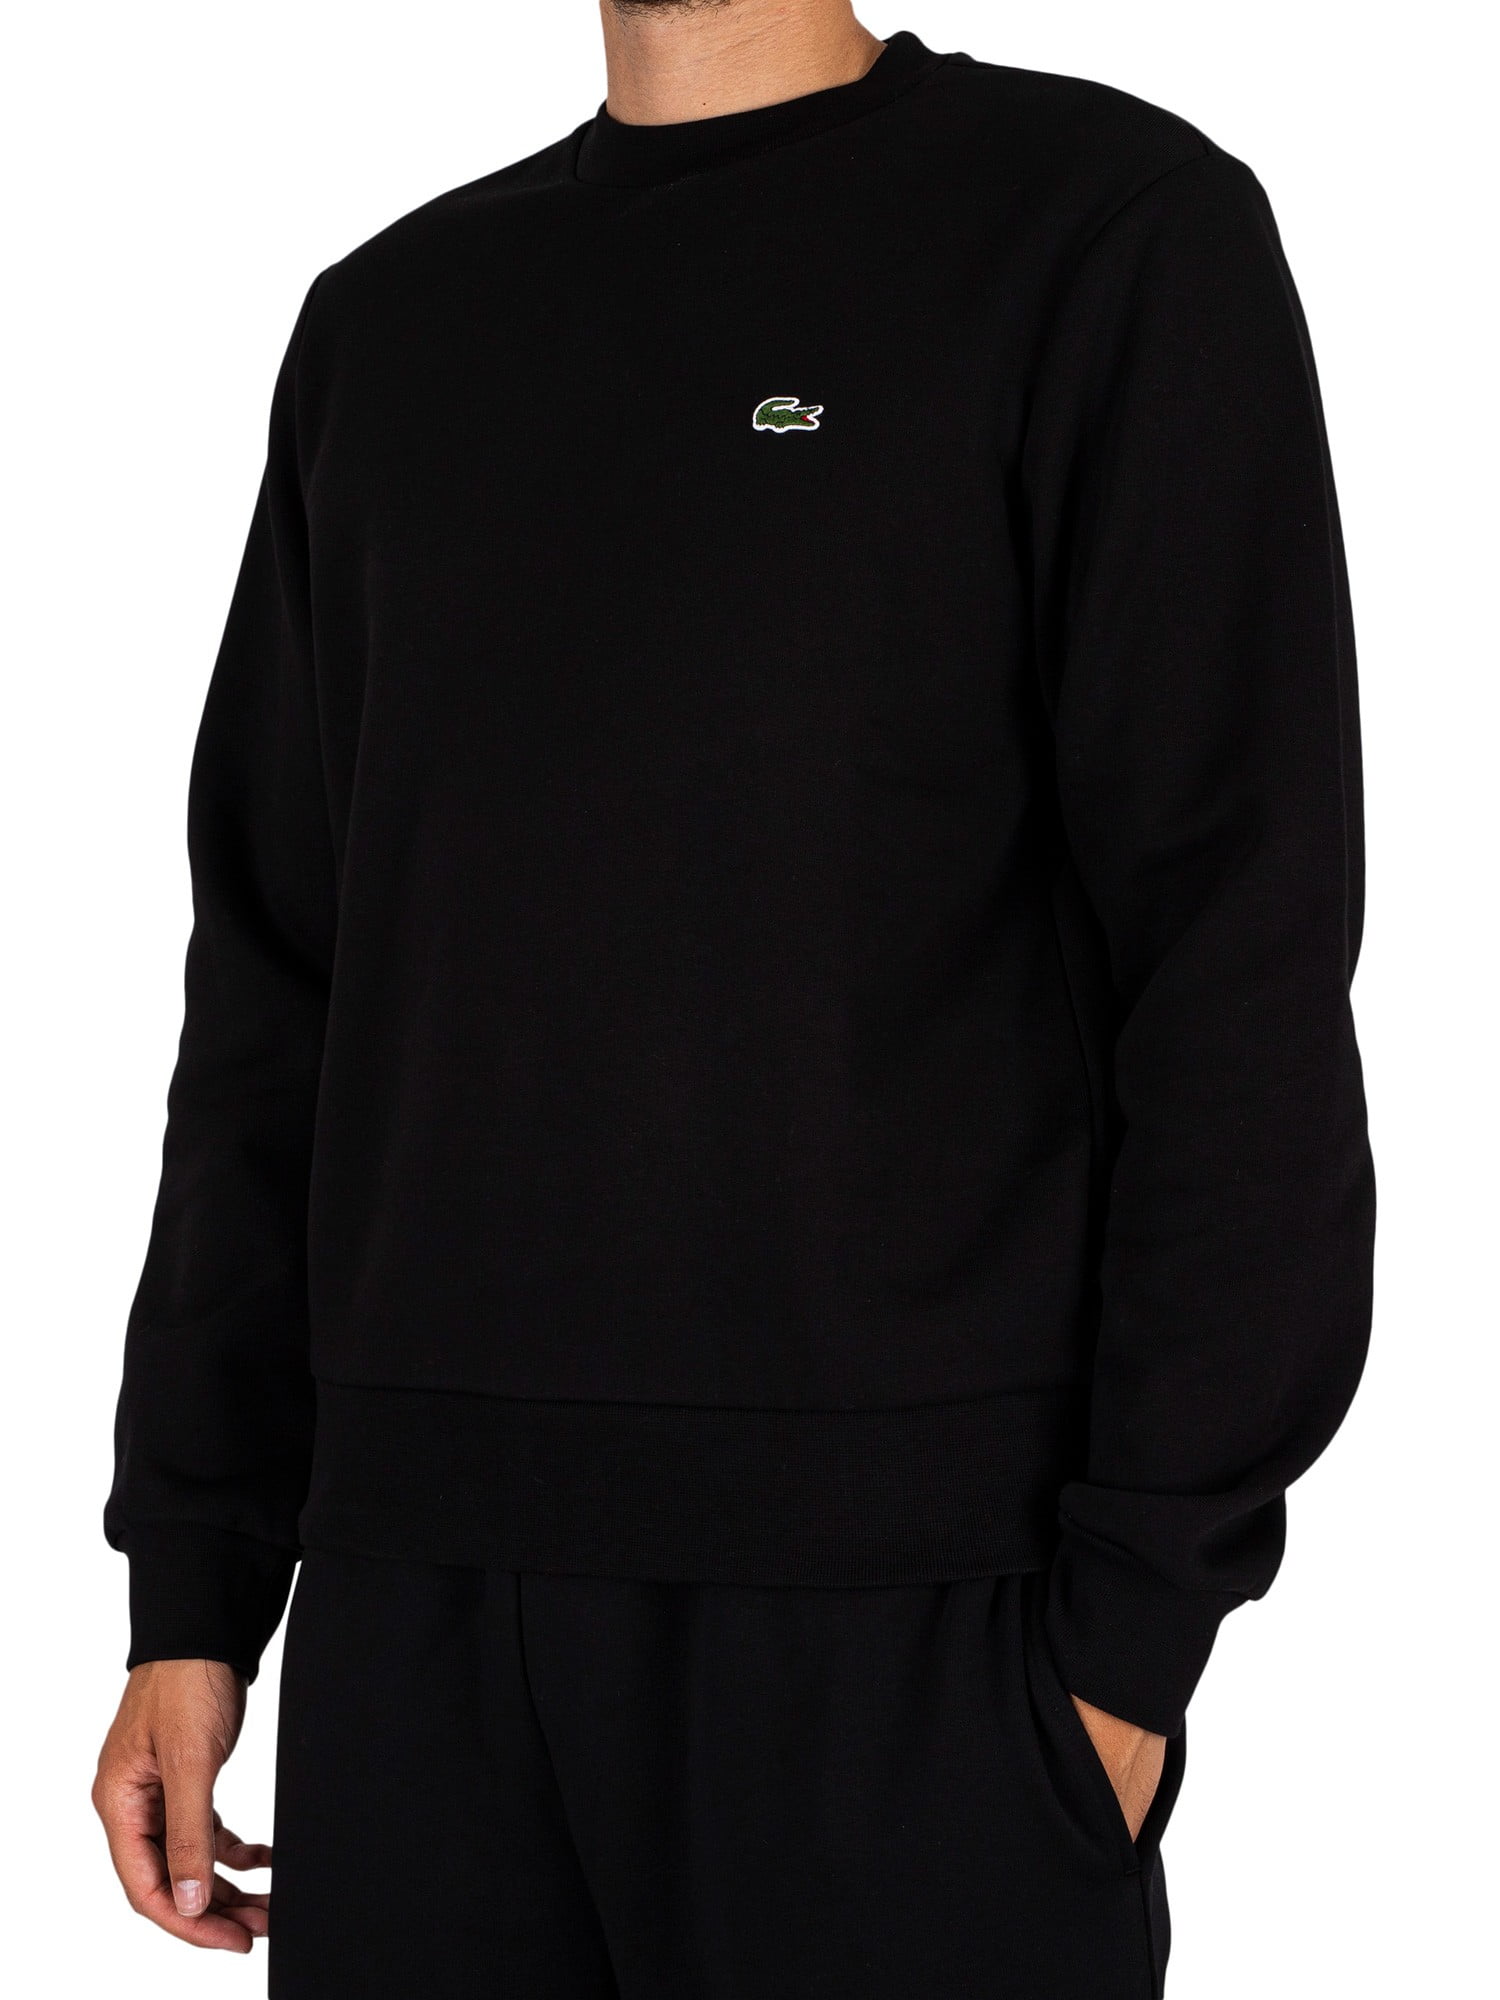 Black Sweatshirt, Lacoste Logo